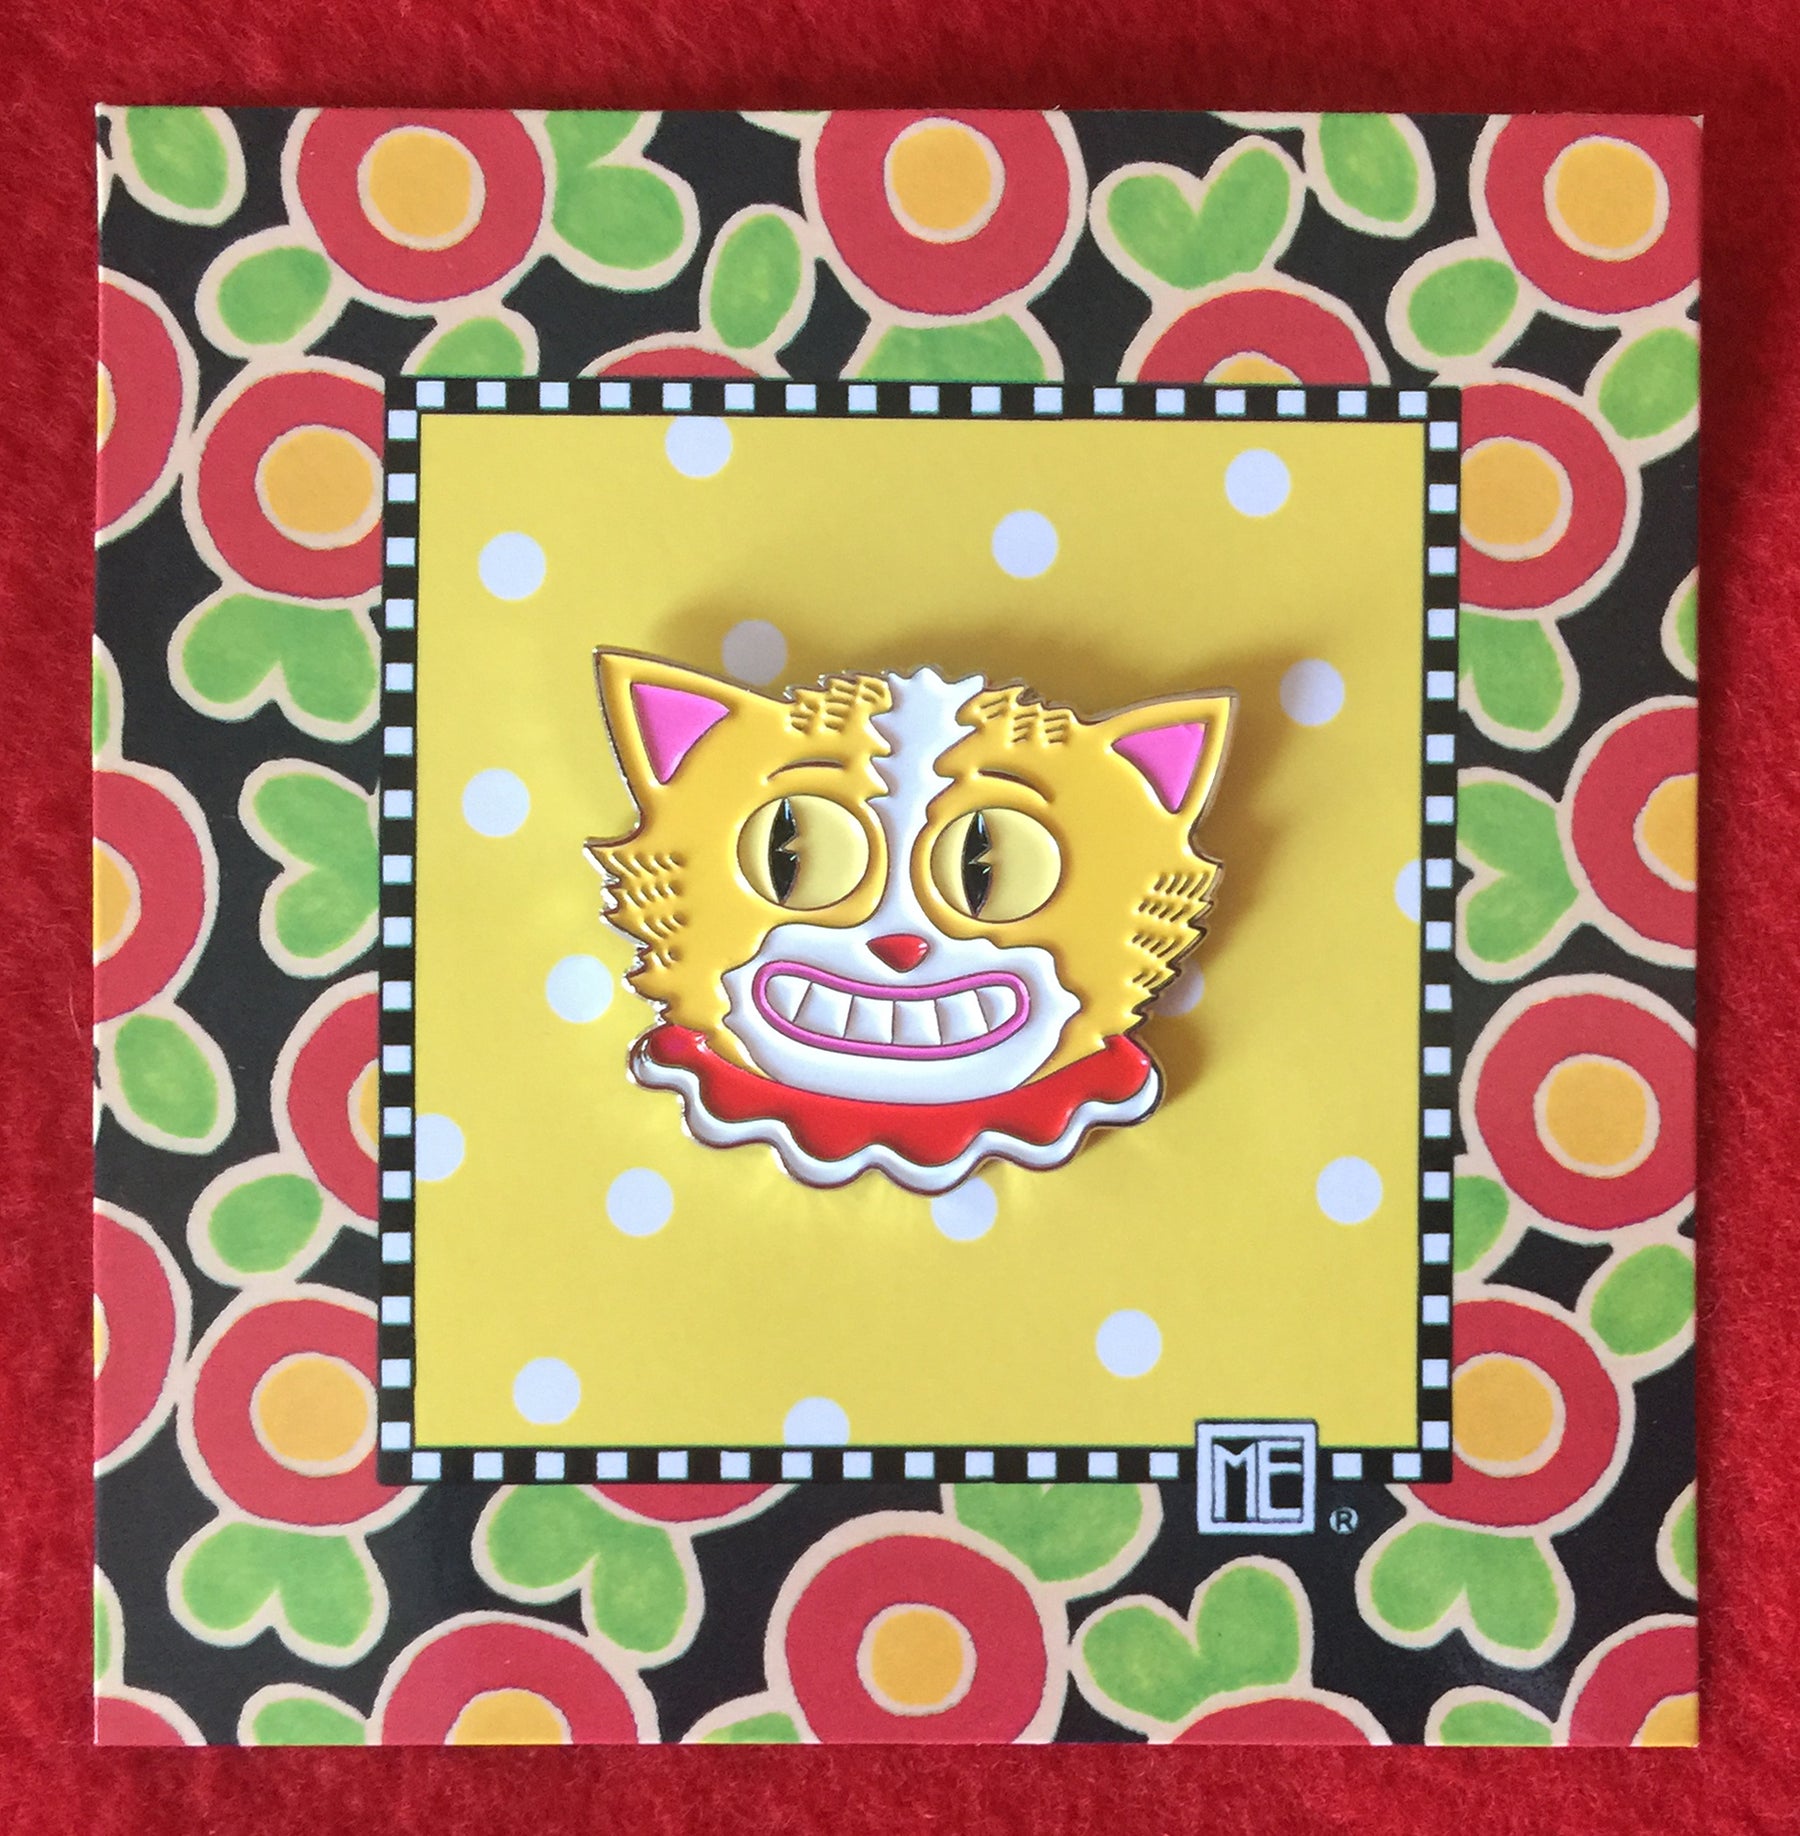 Smiling Cat Enamel Art Pin